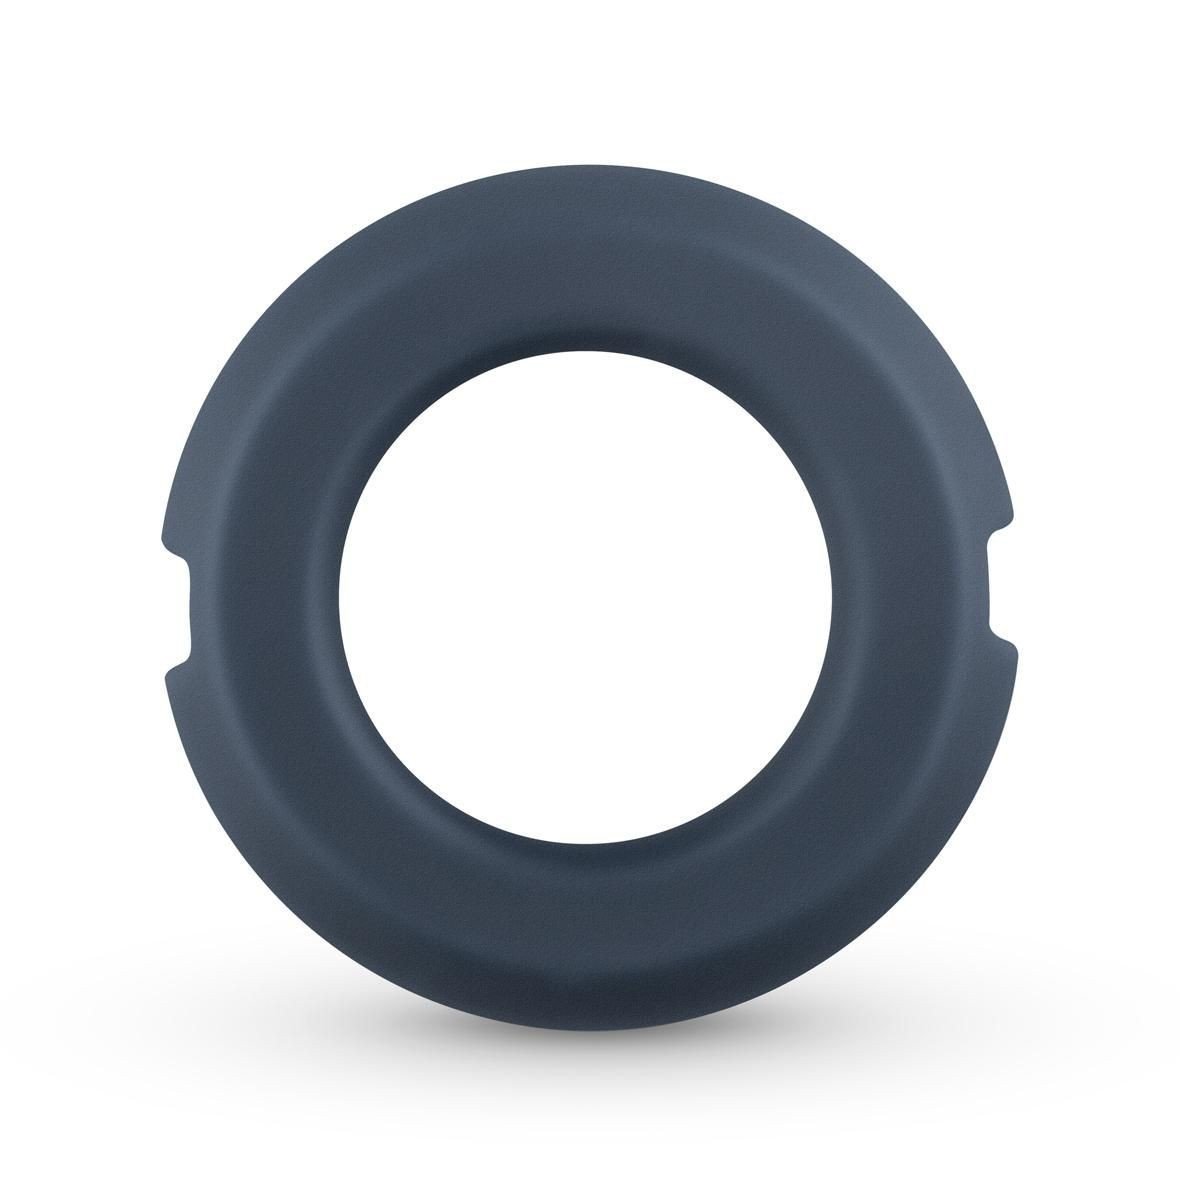 Boners Cock Ring with Carbon Steel, šedý silikonový kroužek na penis